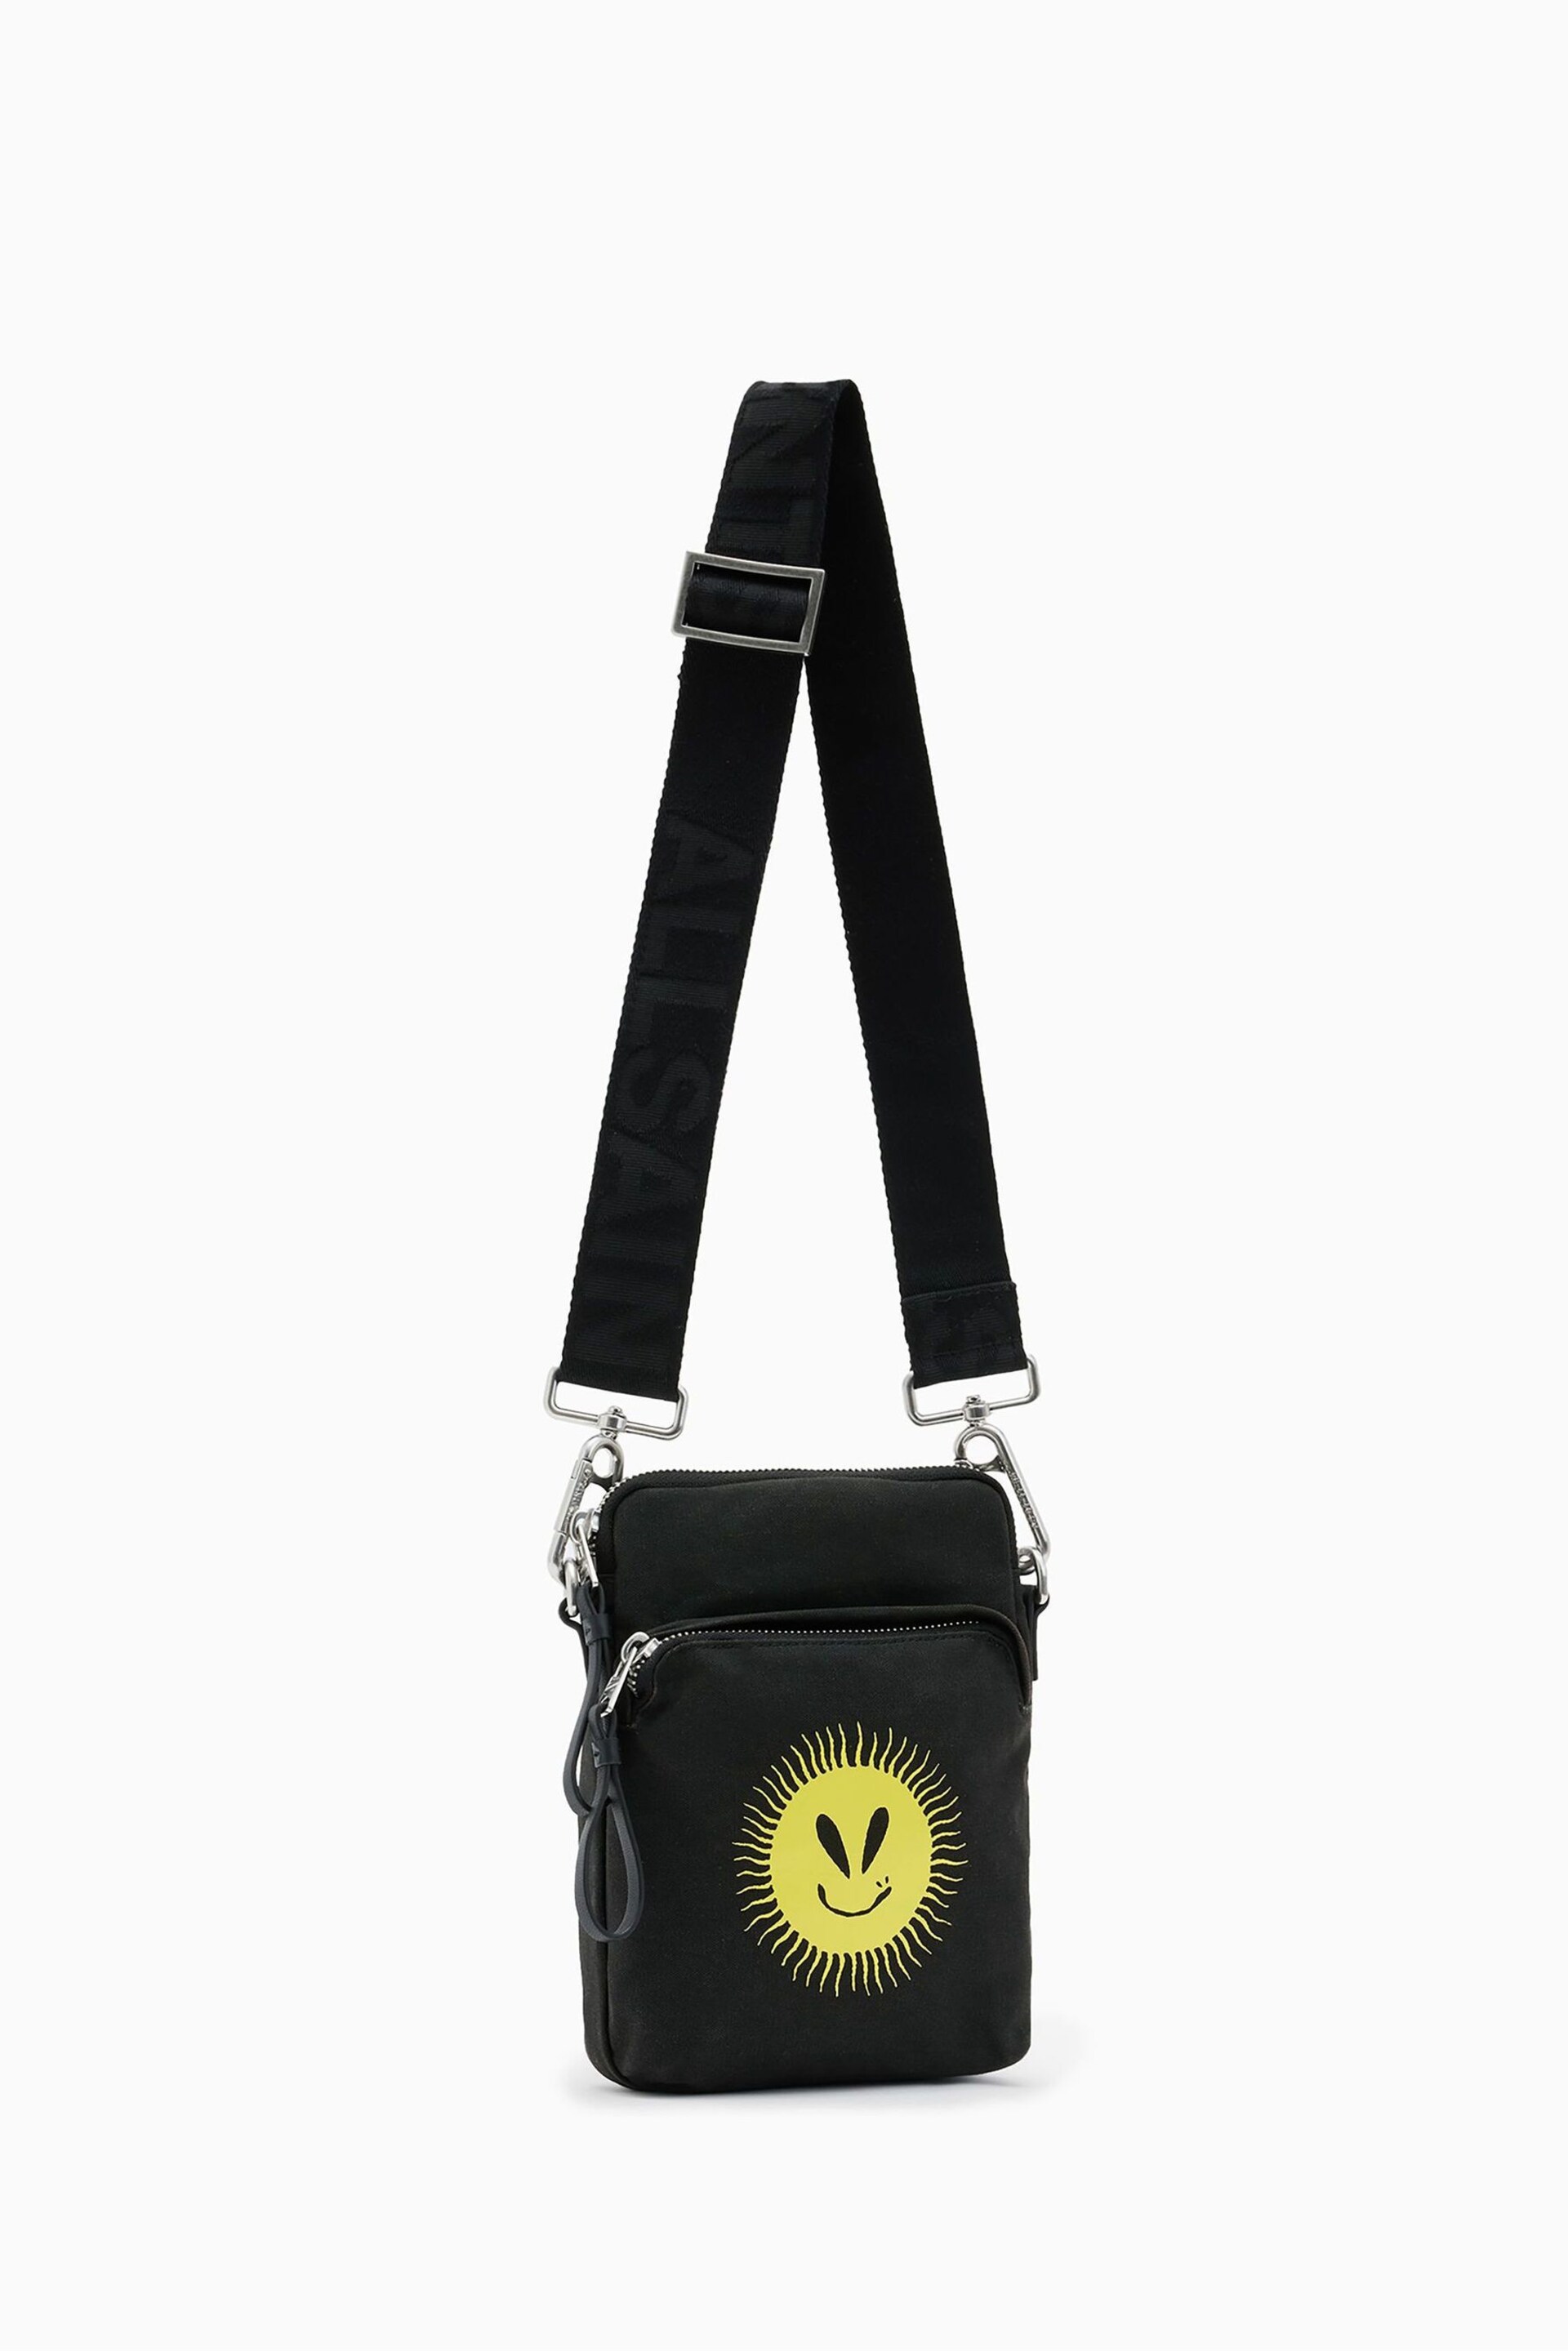 AllSaints Black/Yellow Falcon Bag - Image 3 of 6